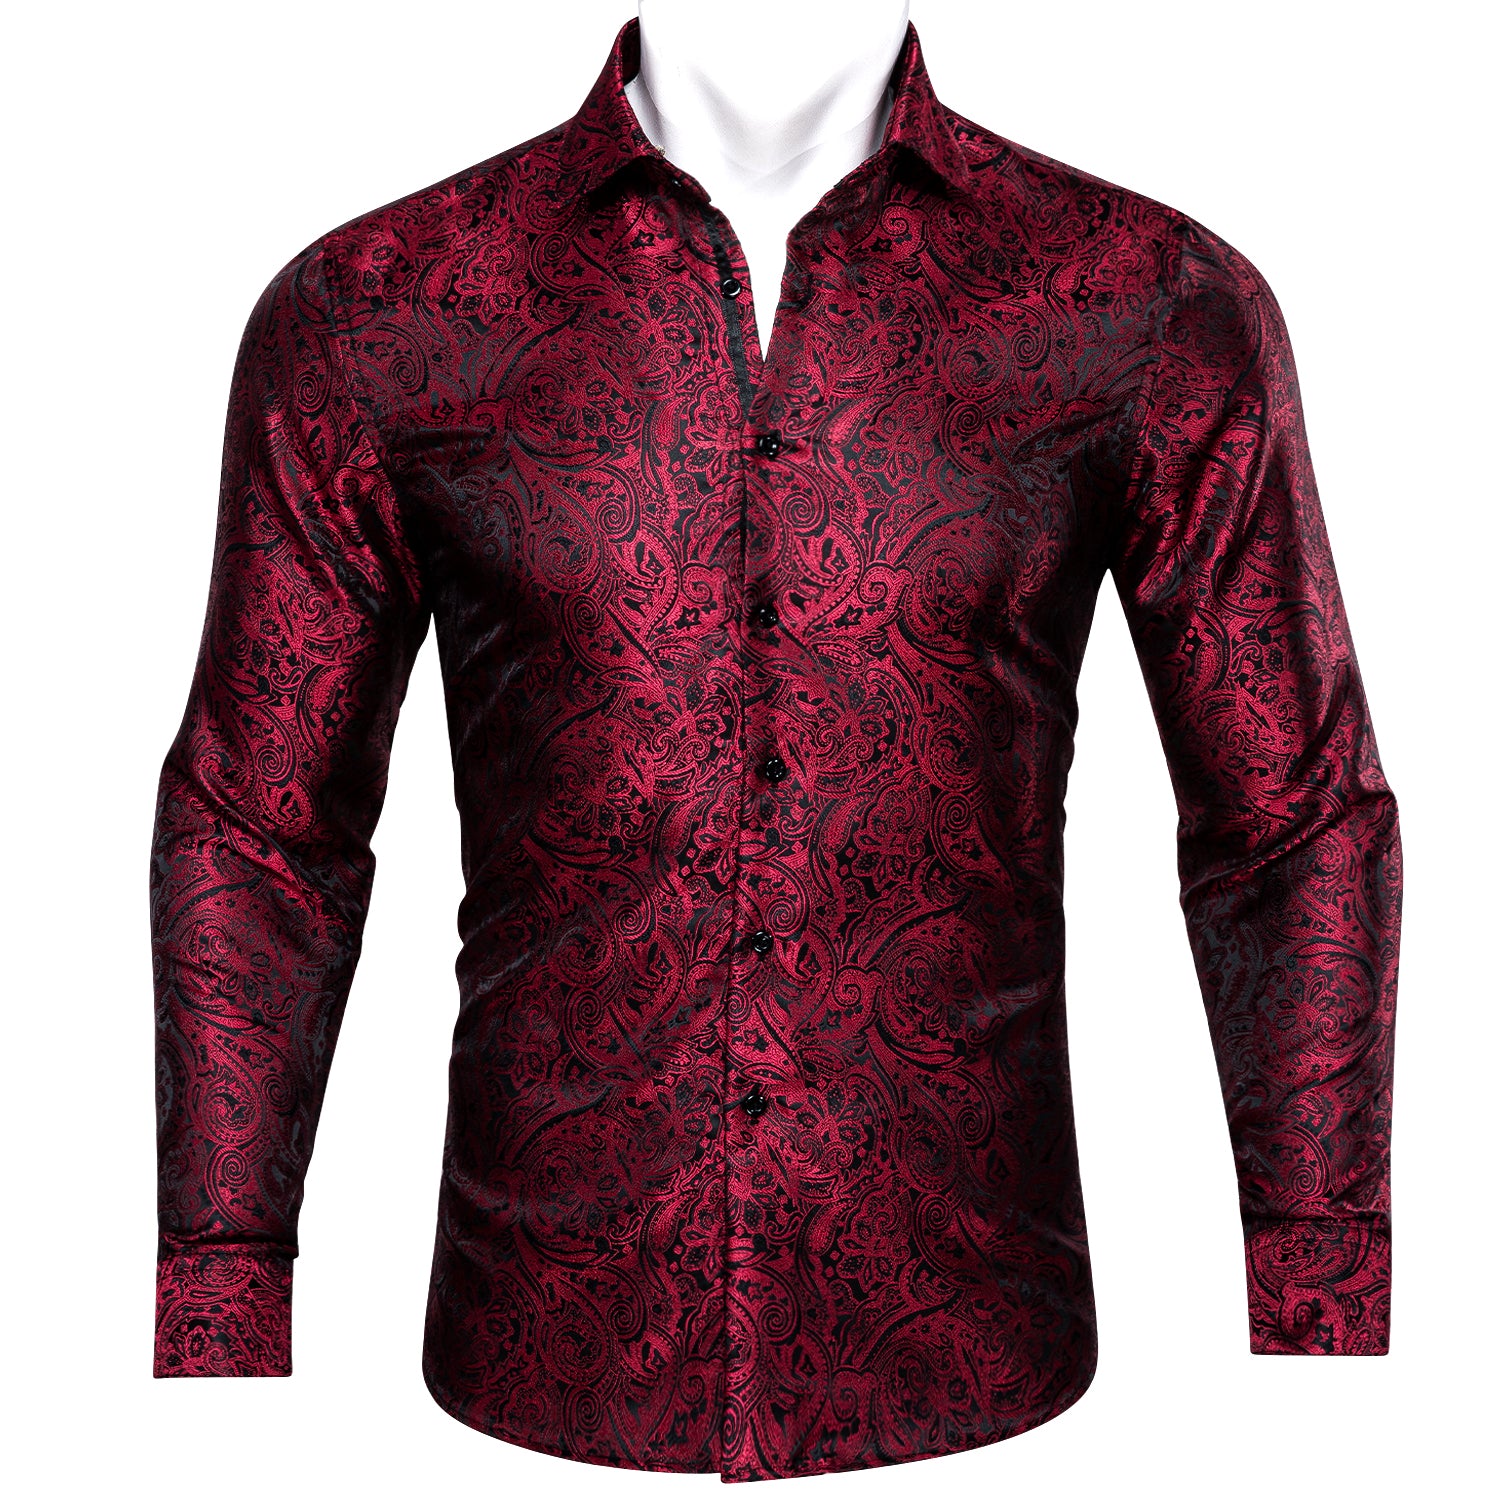 Barry.wang Black Red Paisley Silk Men's Shirt